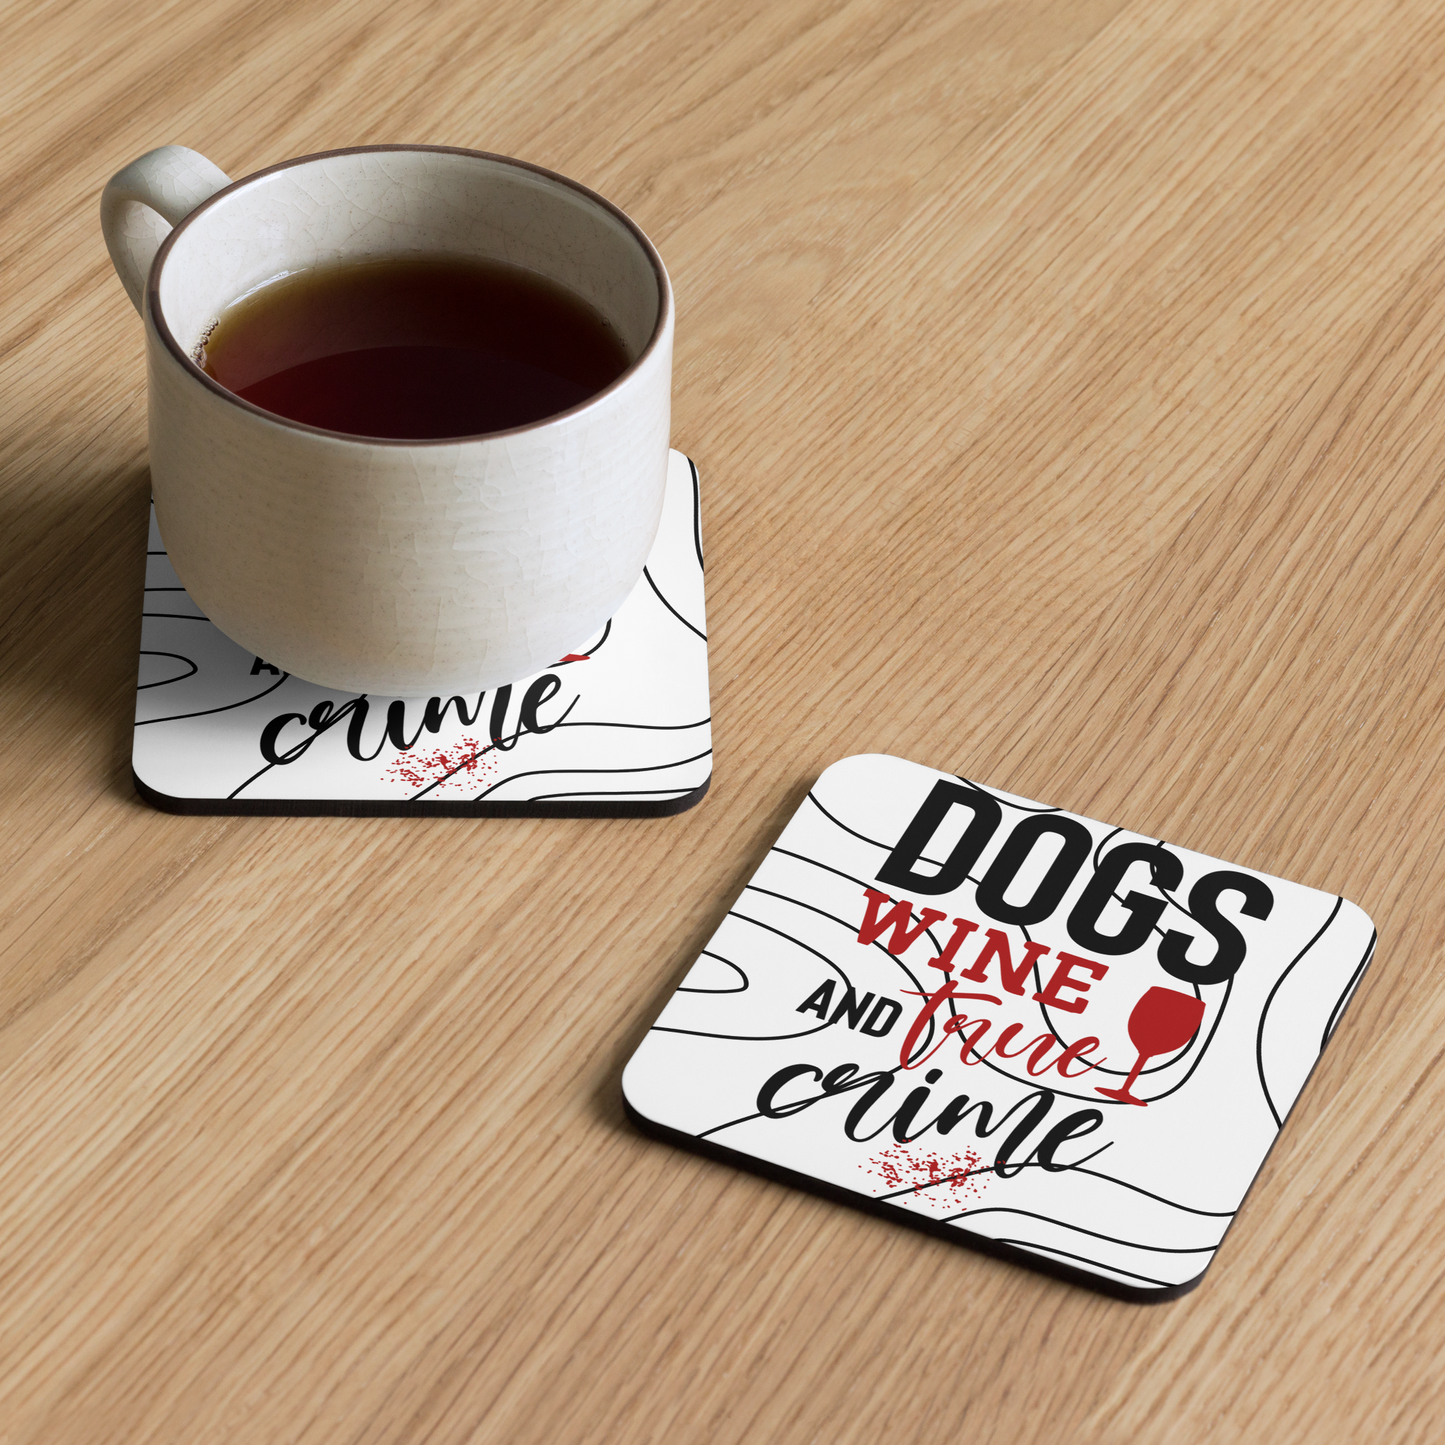 Dogs Wine and True Crime Cork-back coaster